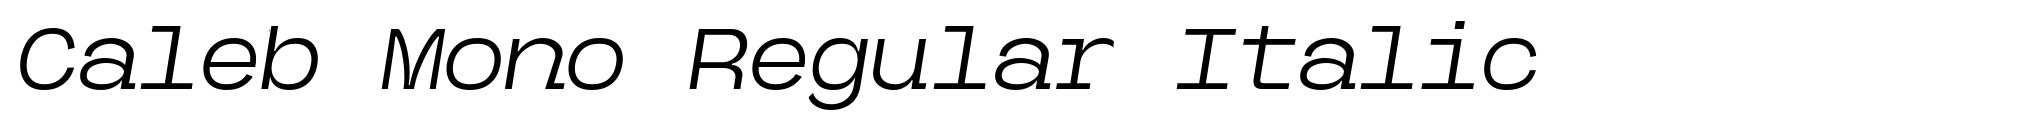 Caleb Mono Regular Italic image